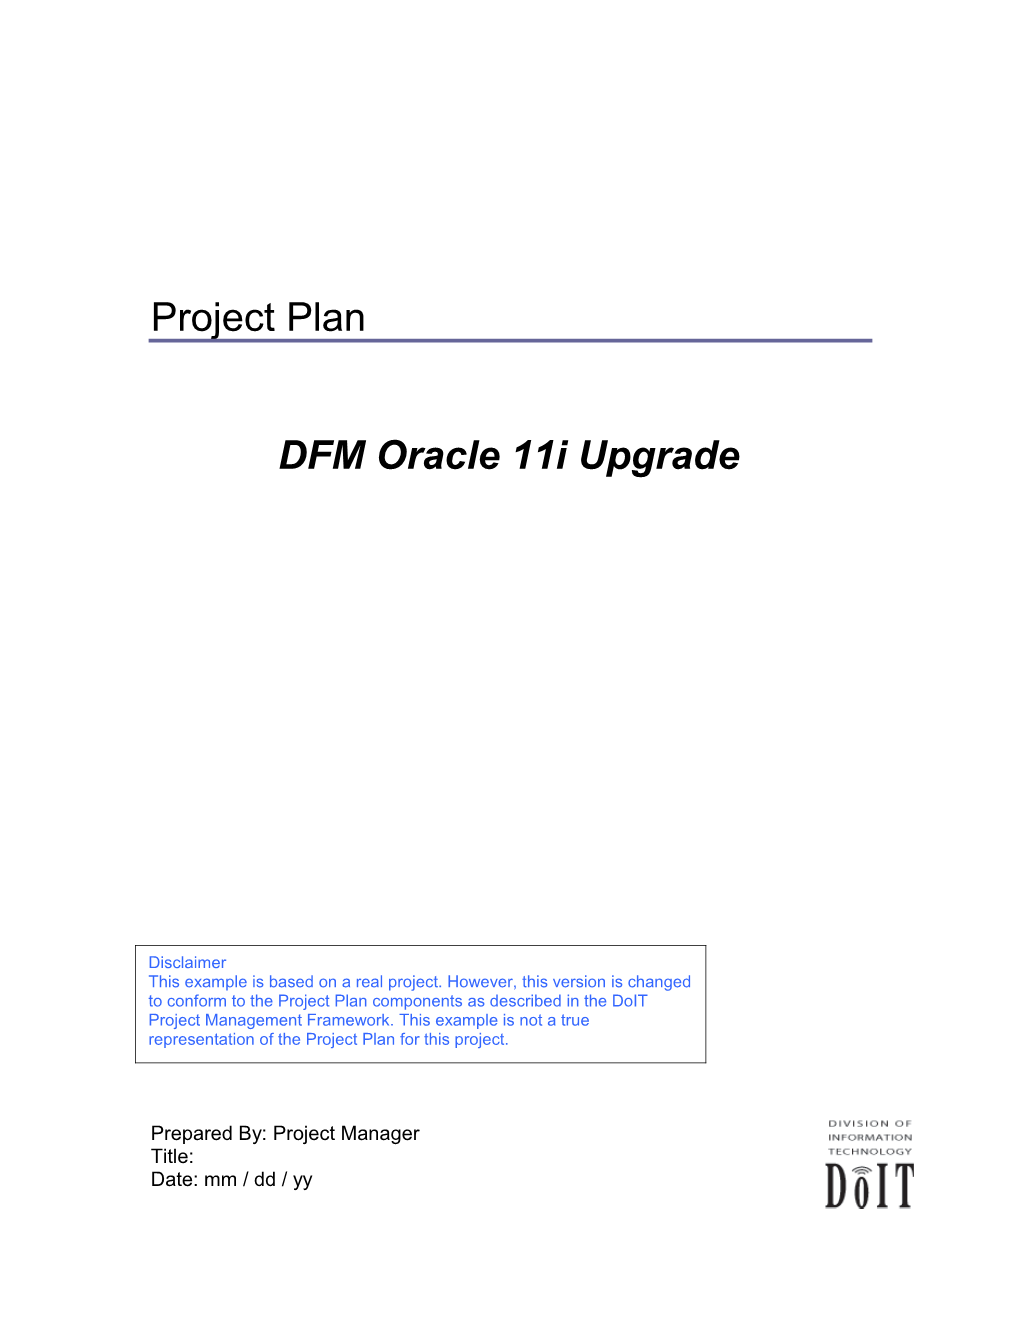 DFM Oracle 11I Upgrade